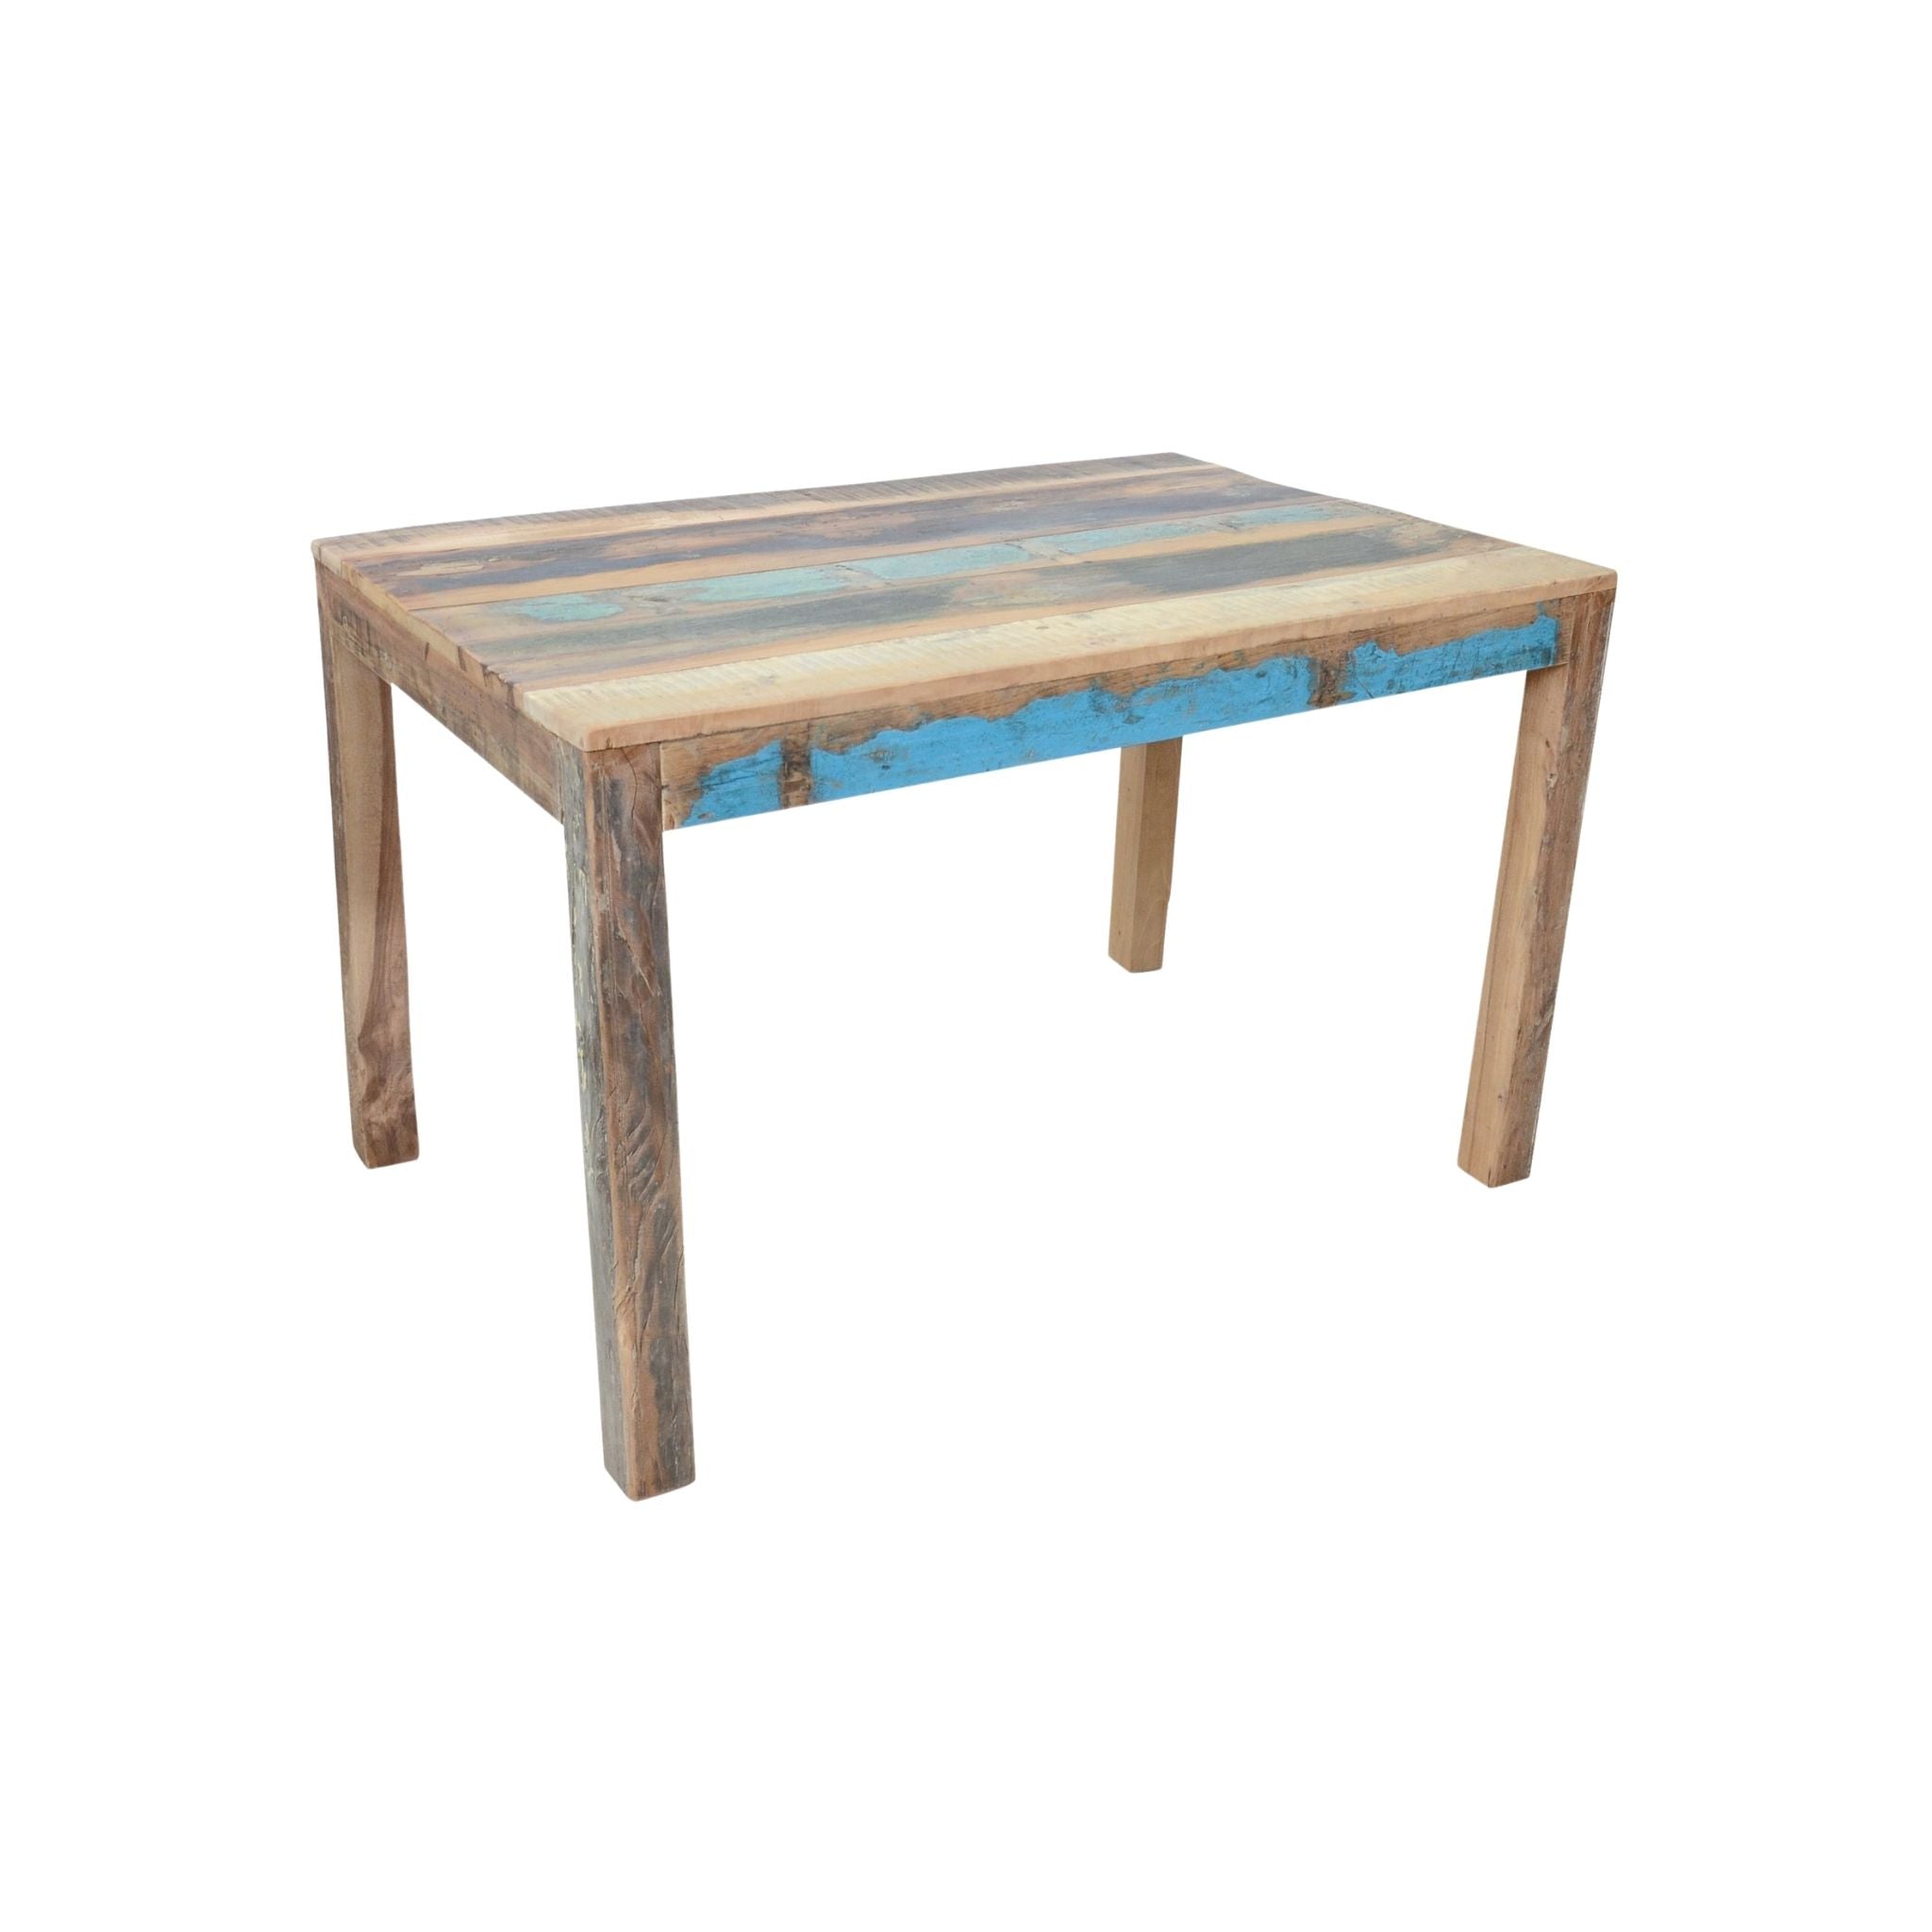 sand dining table product image on whitebackground